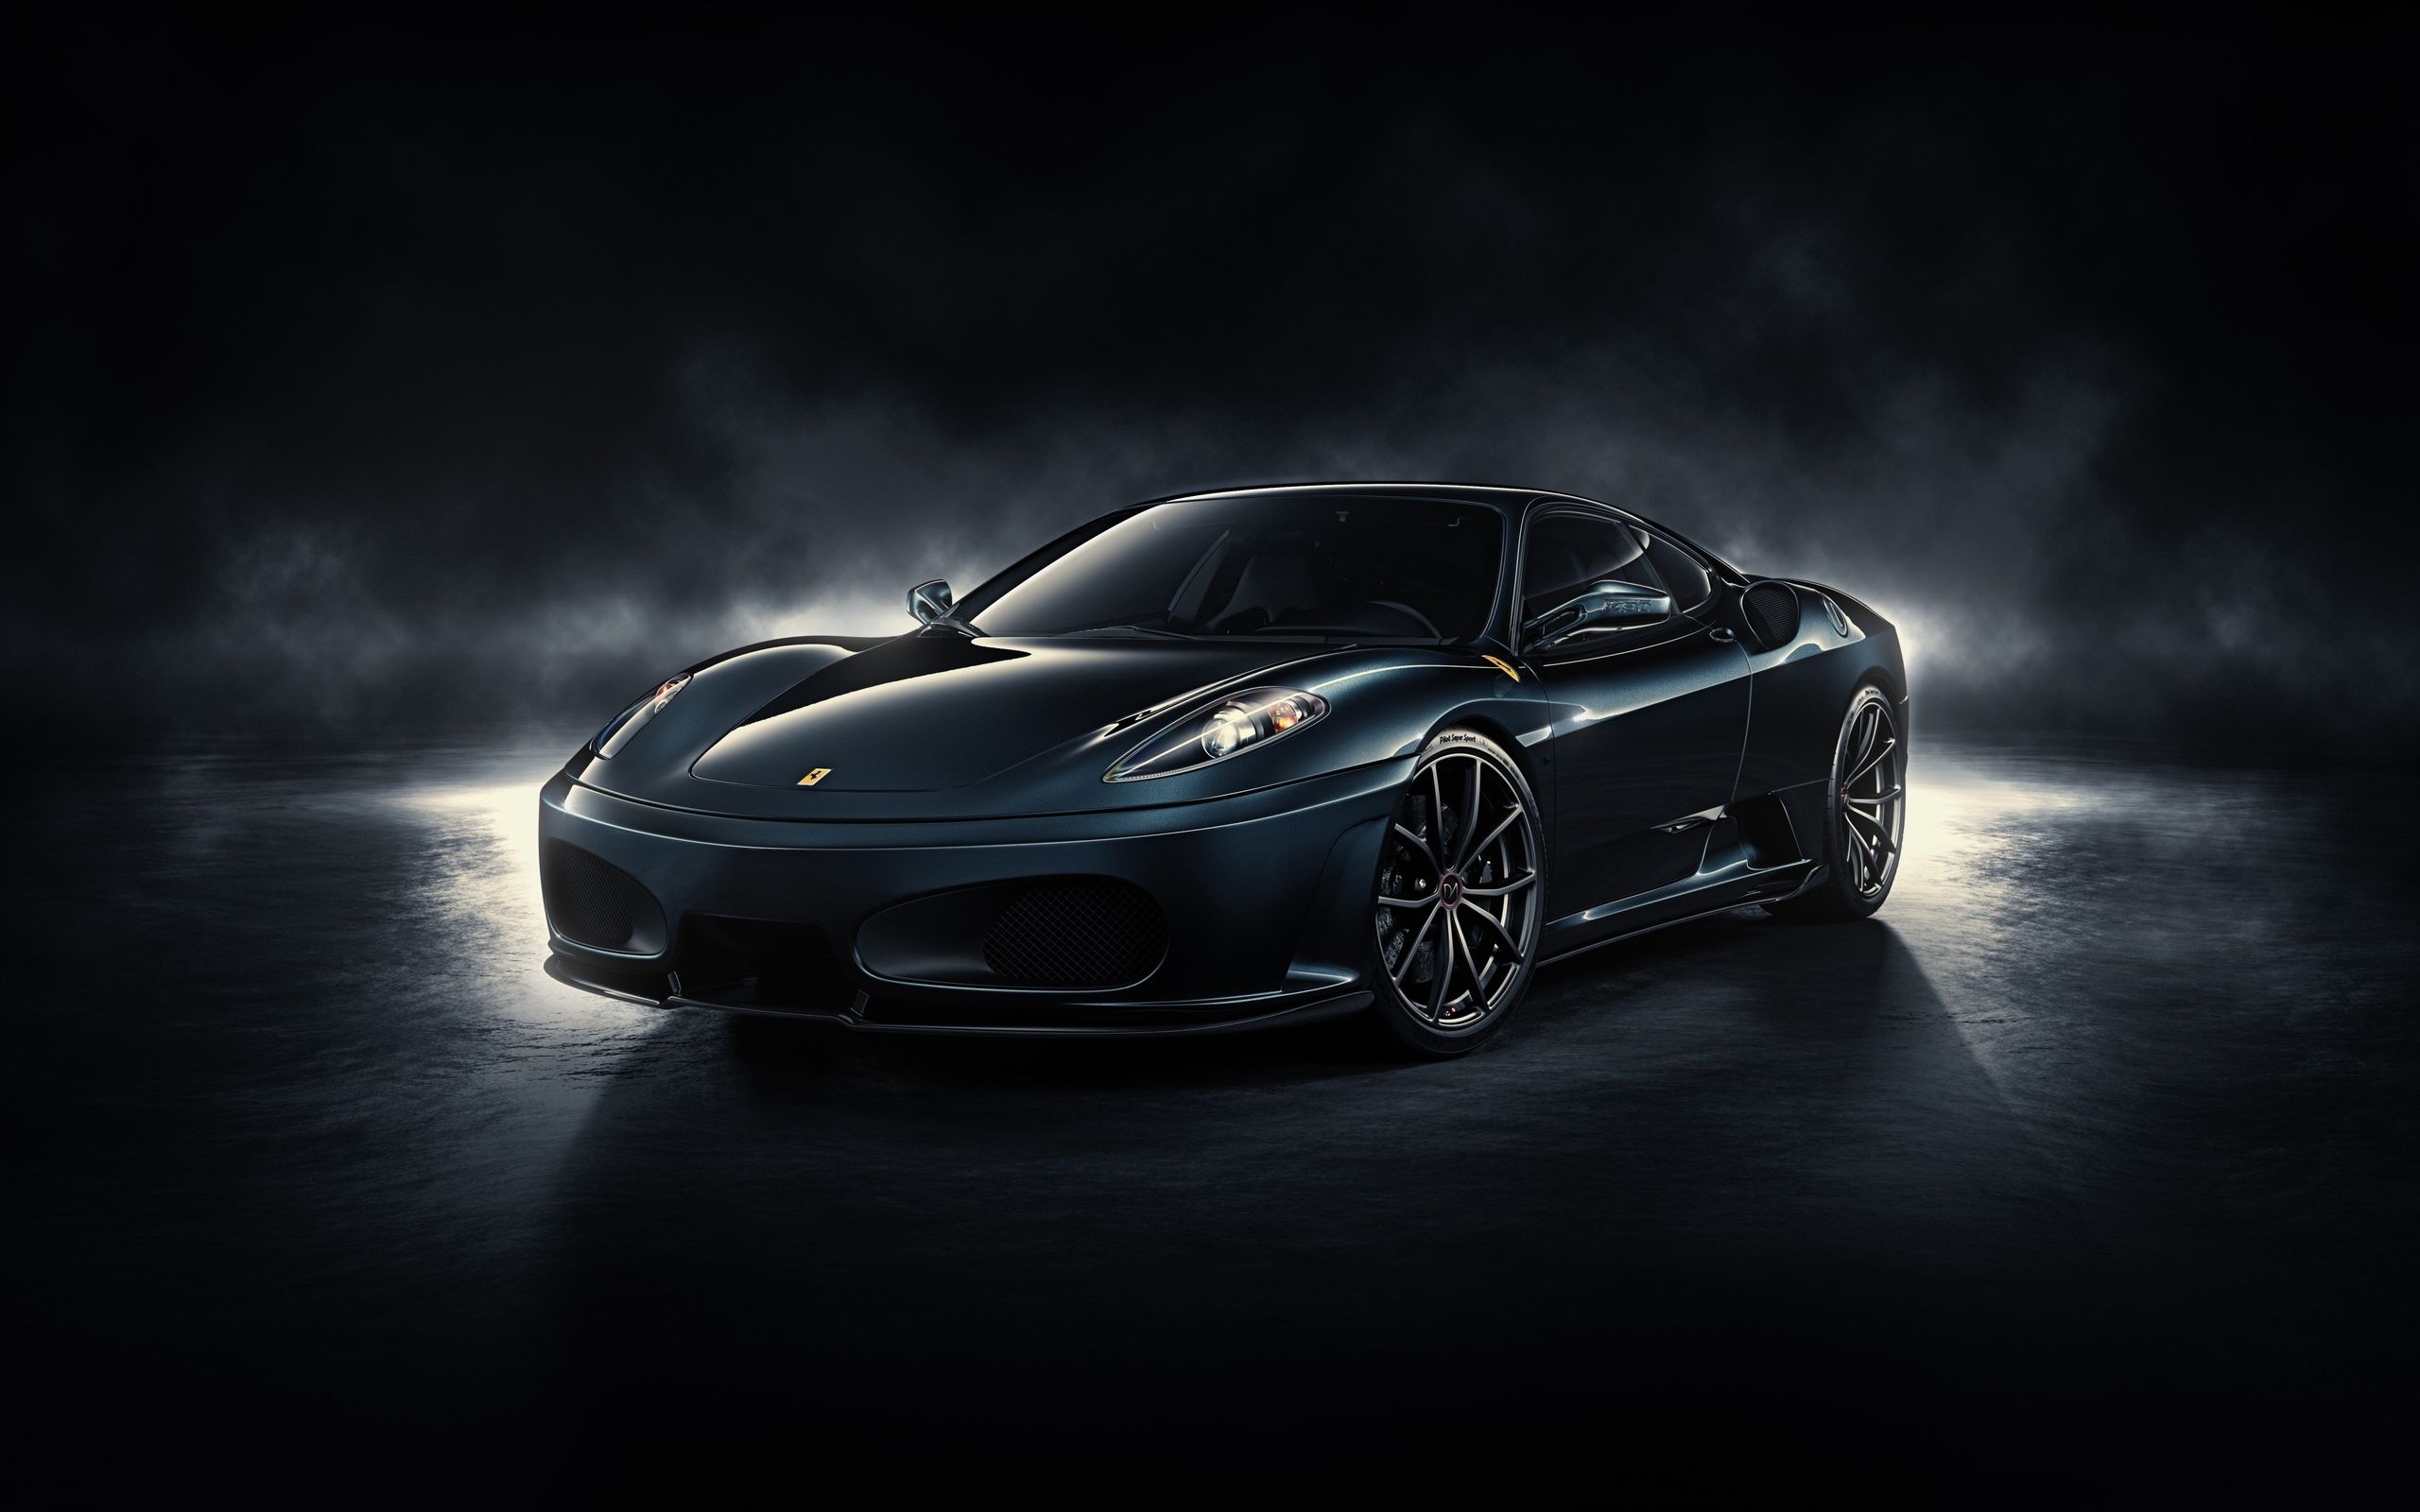 Cool Car wallpaper with Black Ferrari in dark Background | New Car ...